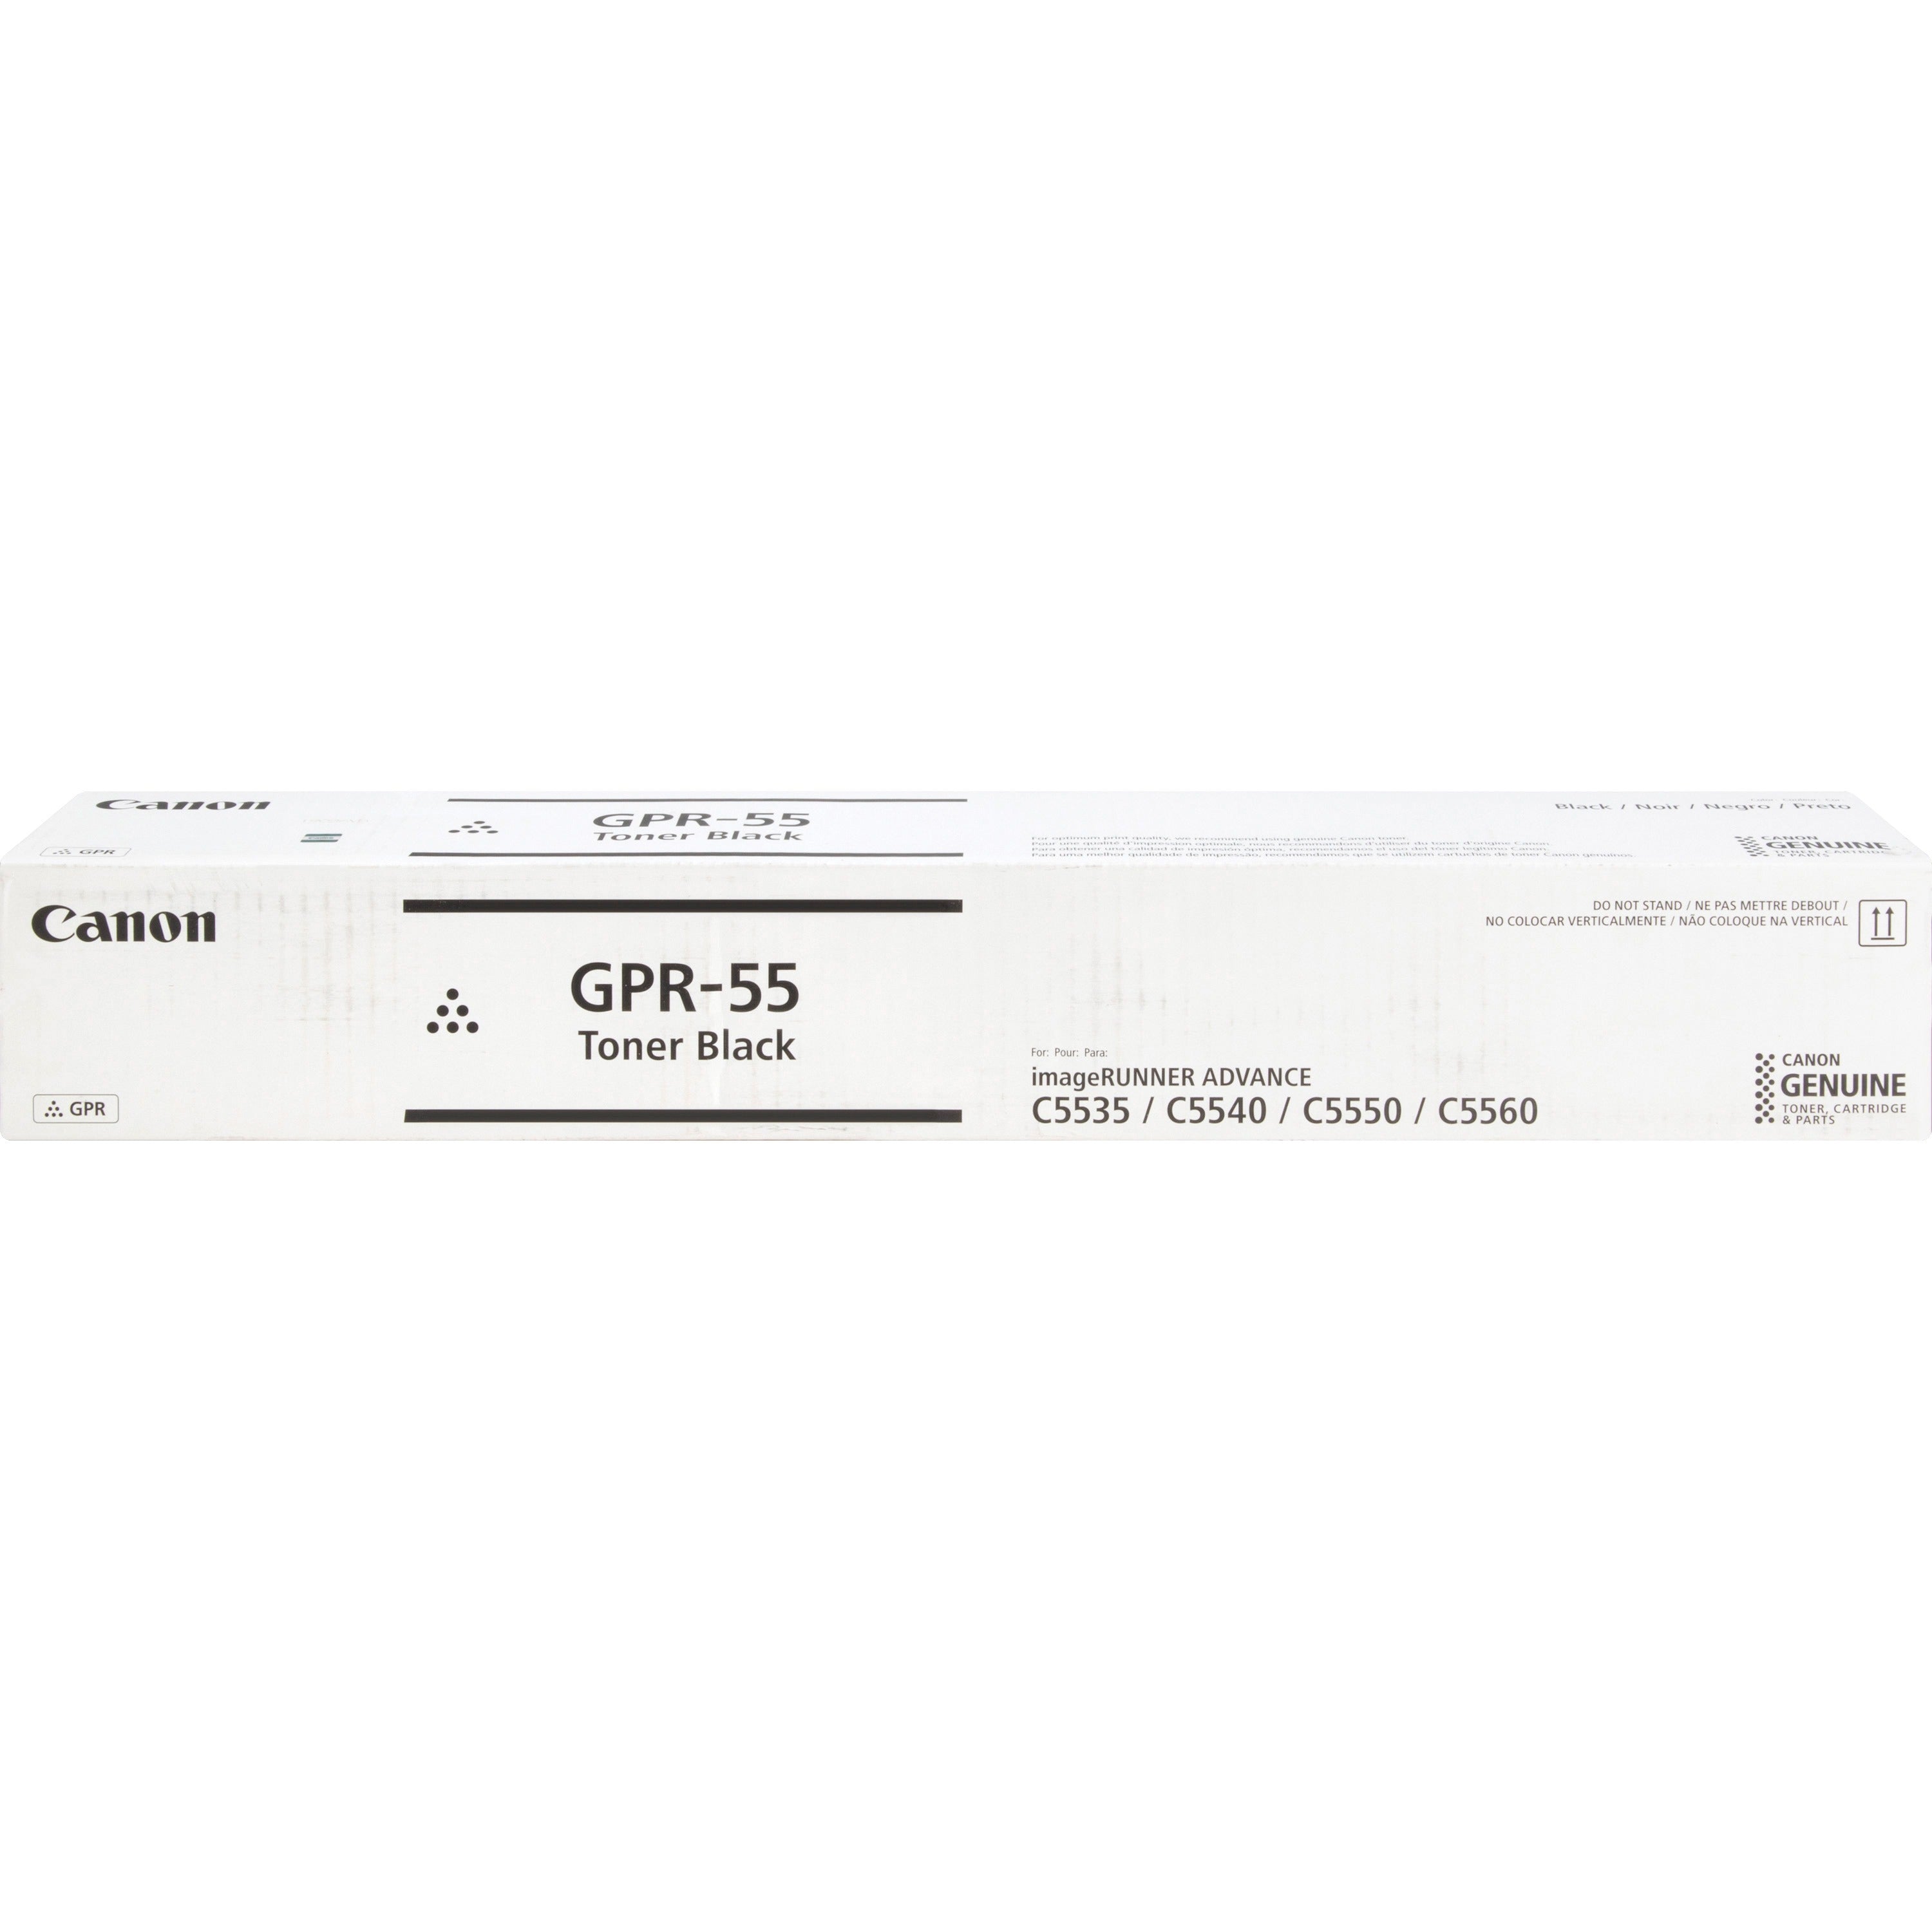 Canon GPR-55 Original Laser Toner Cartridge - Black - 1 Each - 69000 Pages